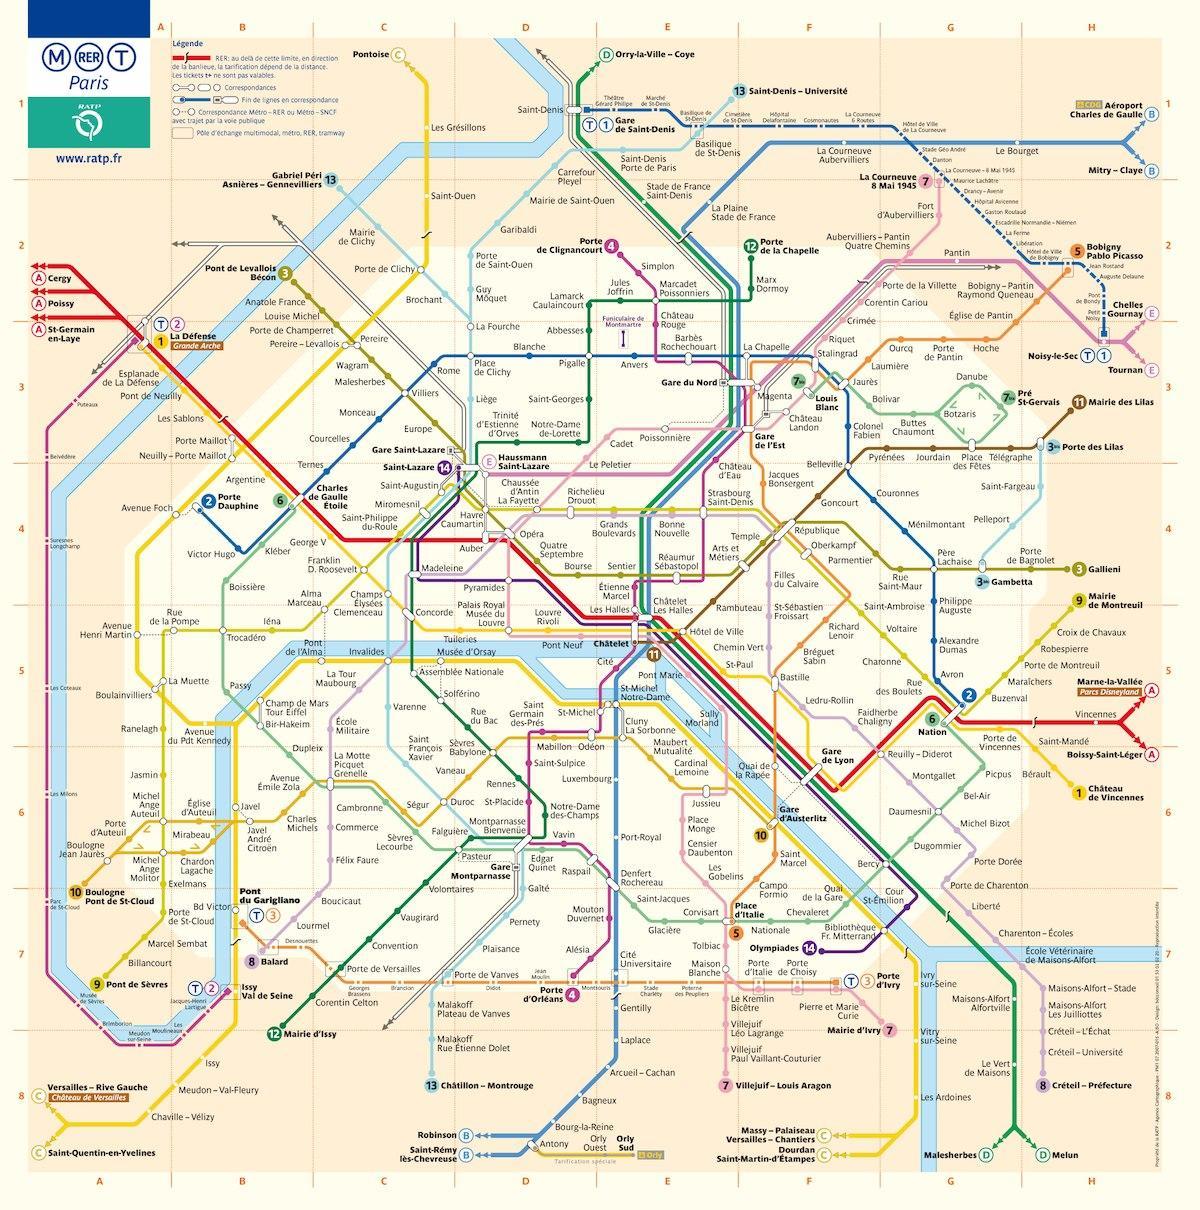 washington dc metro mapu s ulicemi